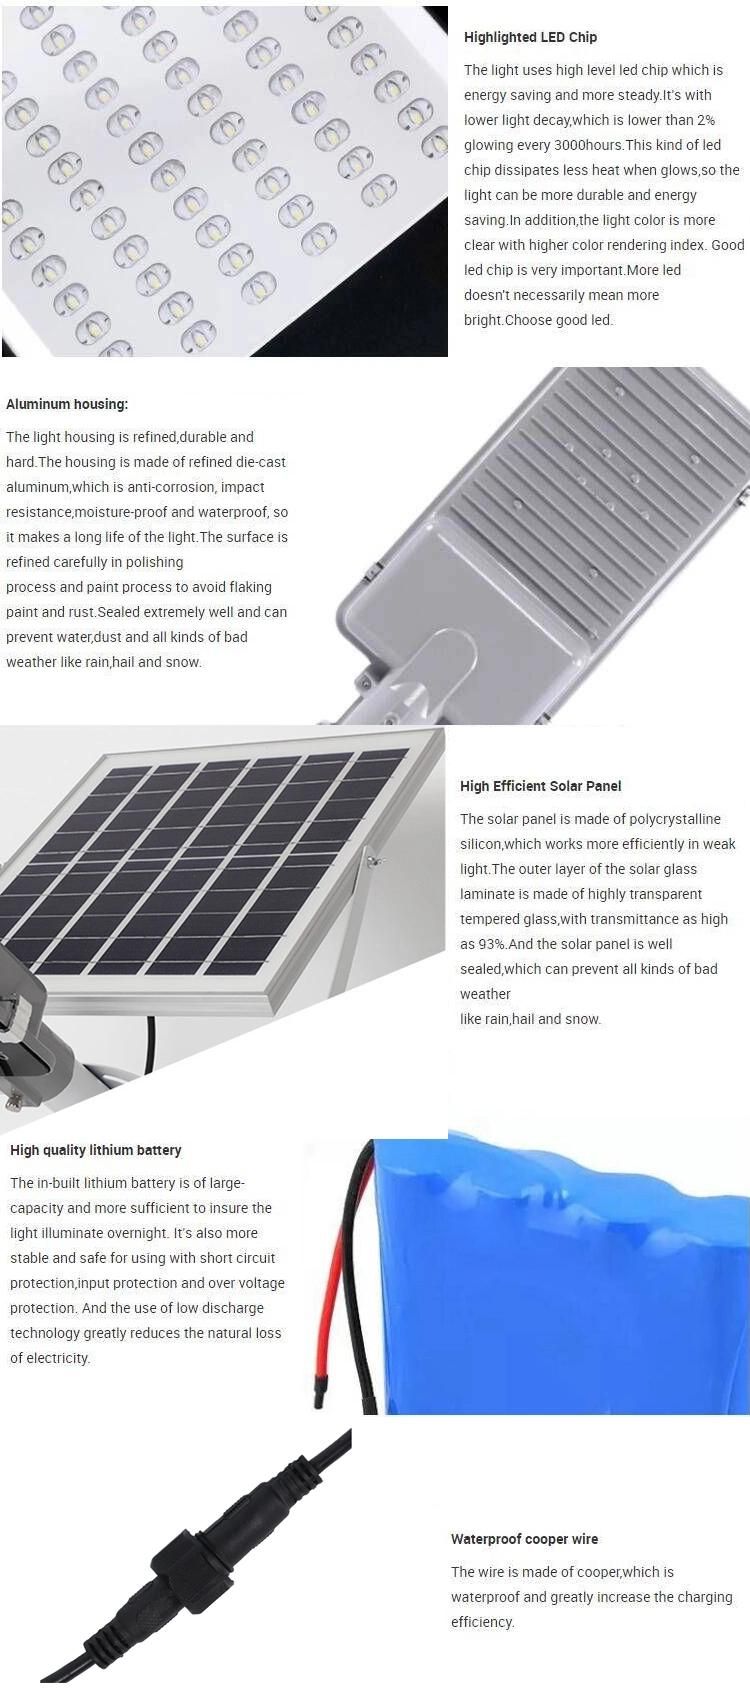 Customize IP65 Die-Cast Aluminum Split-up Solar Street Light